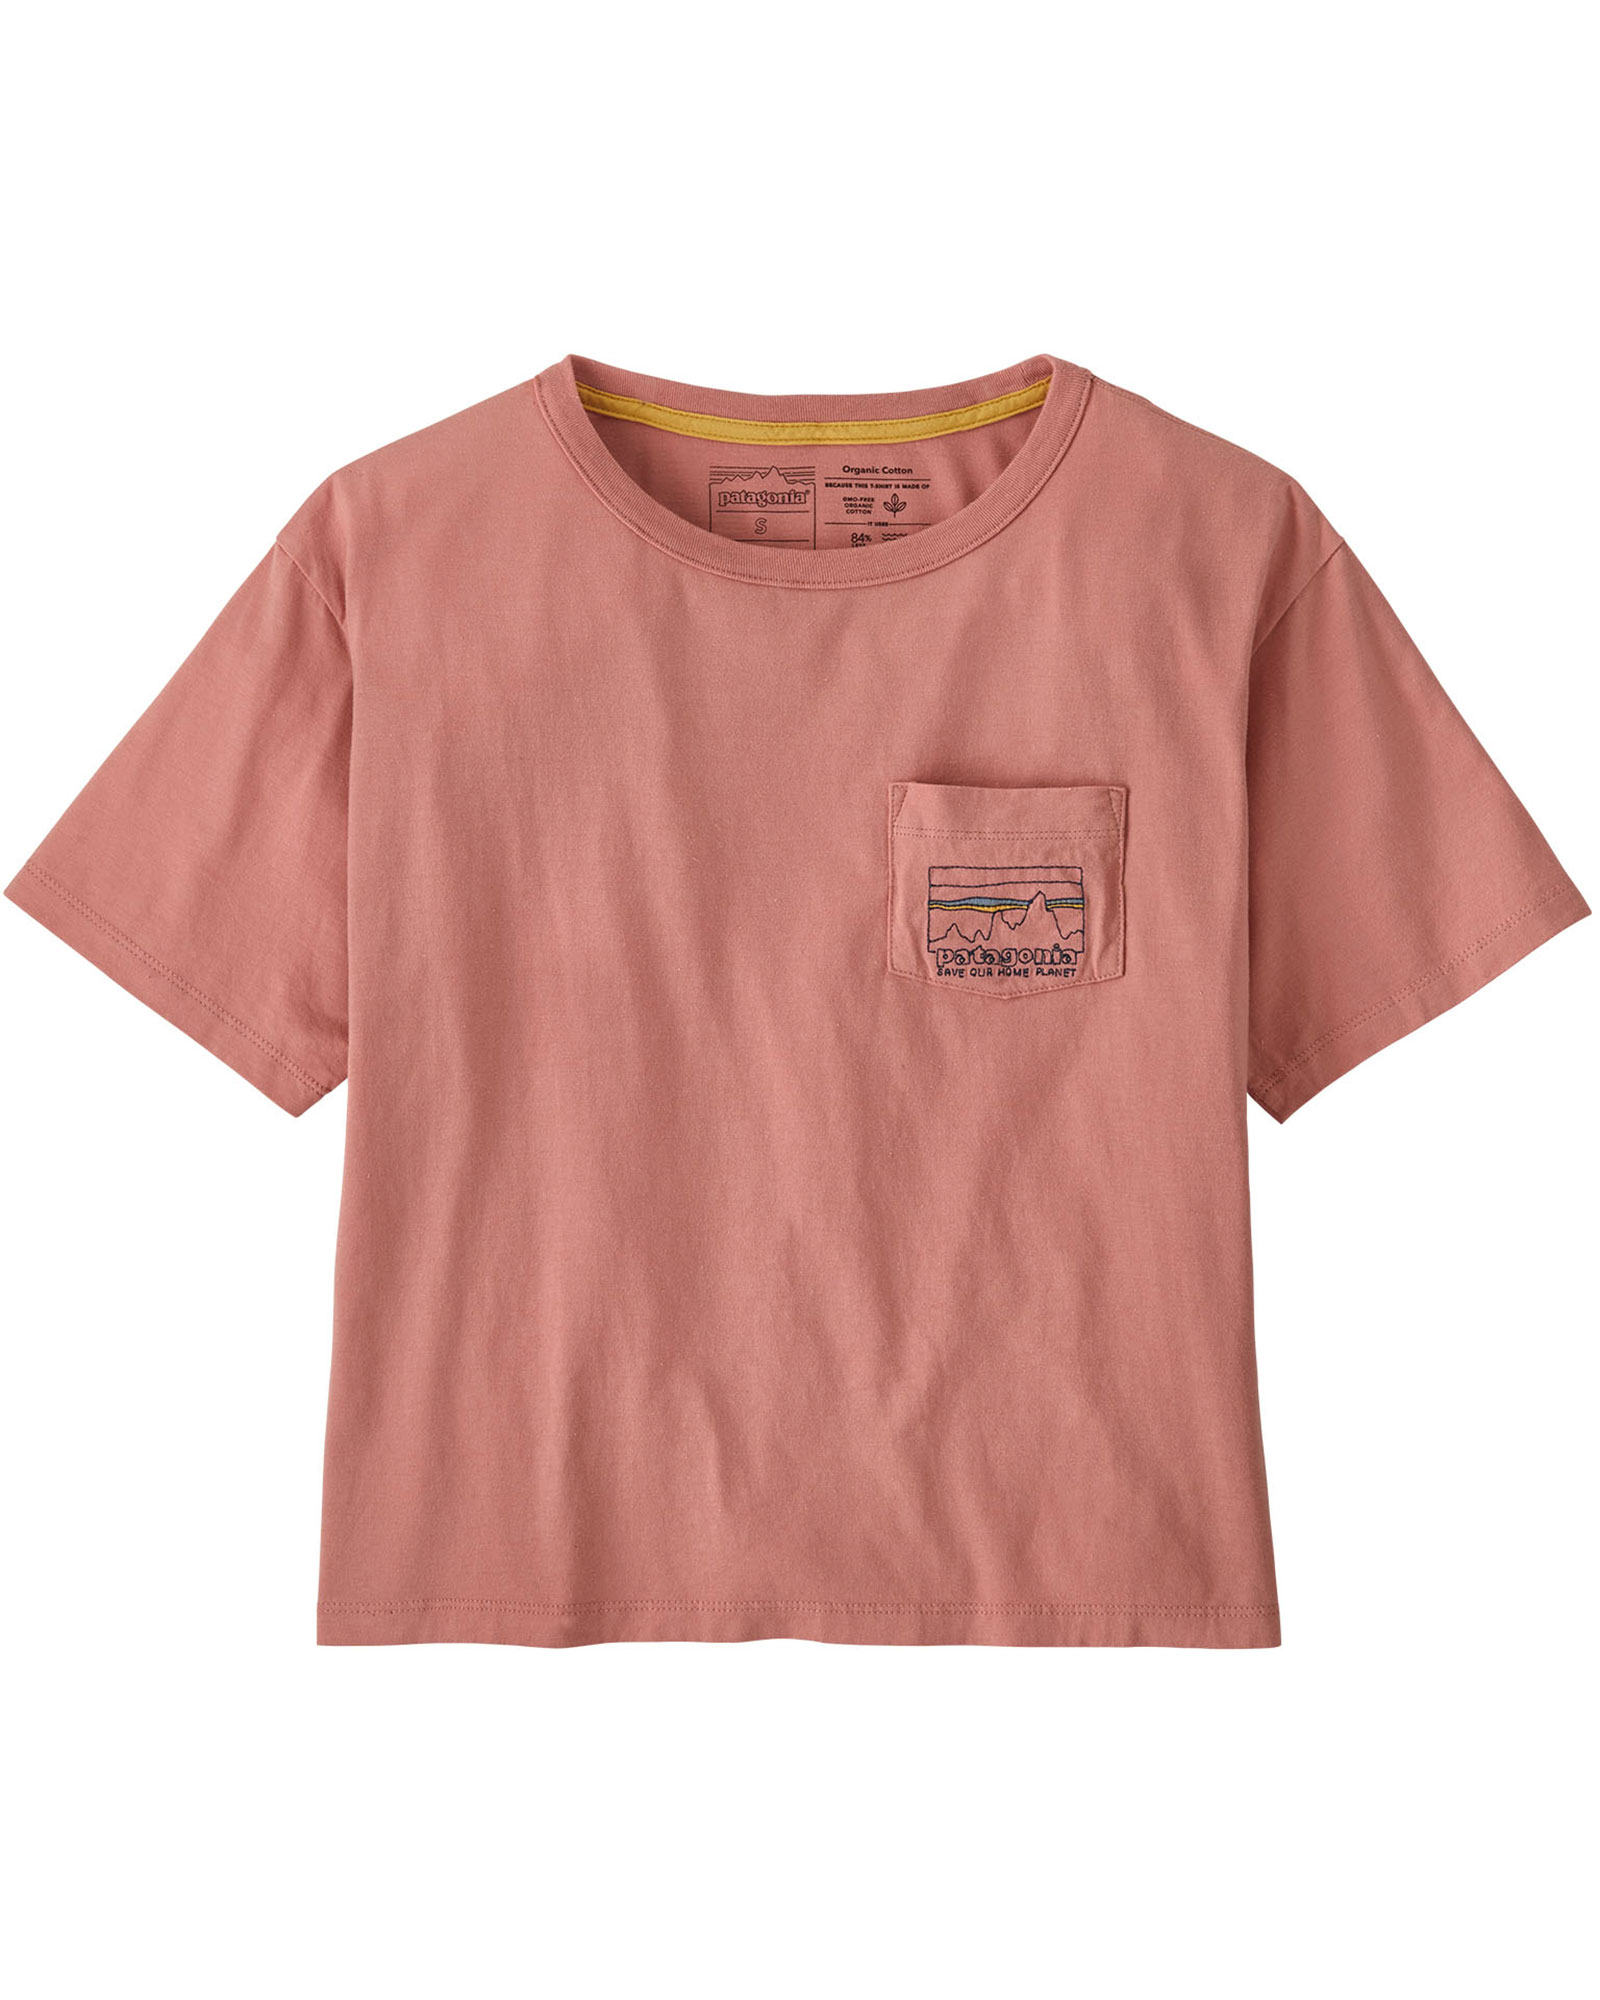 Patagonia Women’s 73 Skyline Easy Cut Pocket T Shirt - Sunfade Pink XS